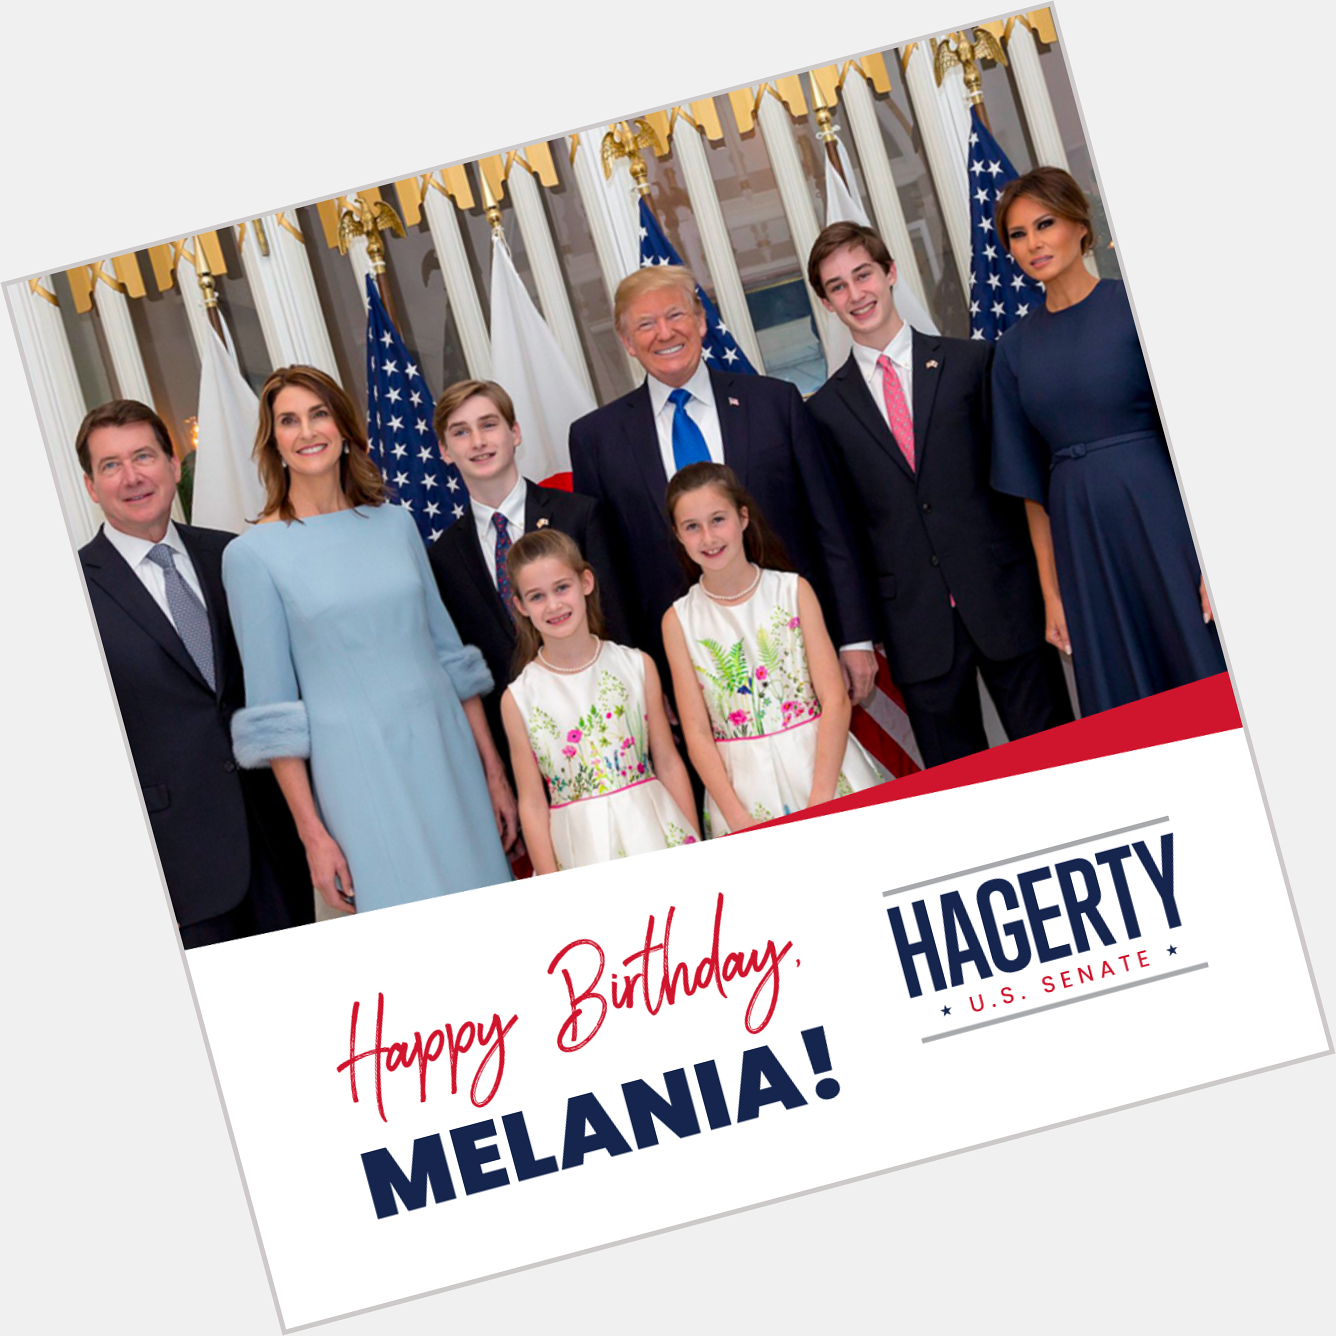 Happy birthday to our dear friend and America s Melania Trump! 